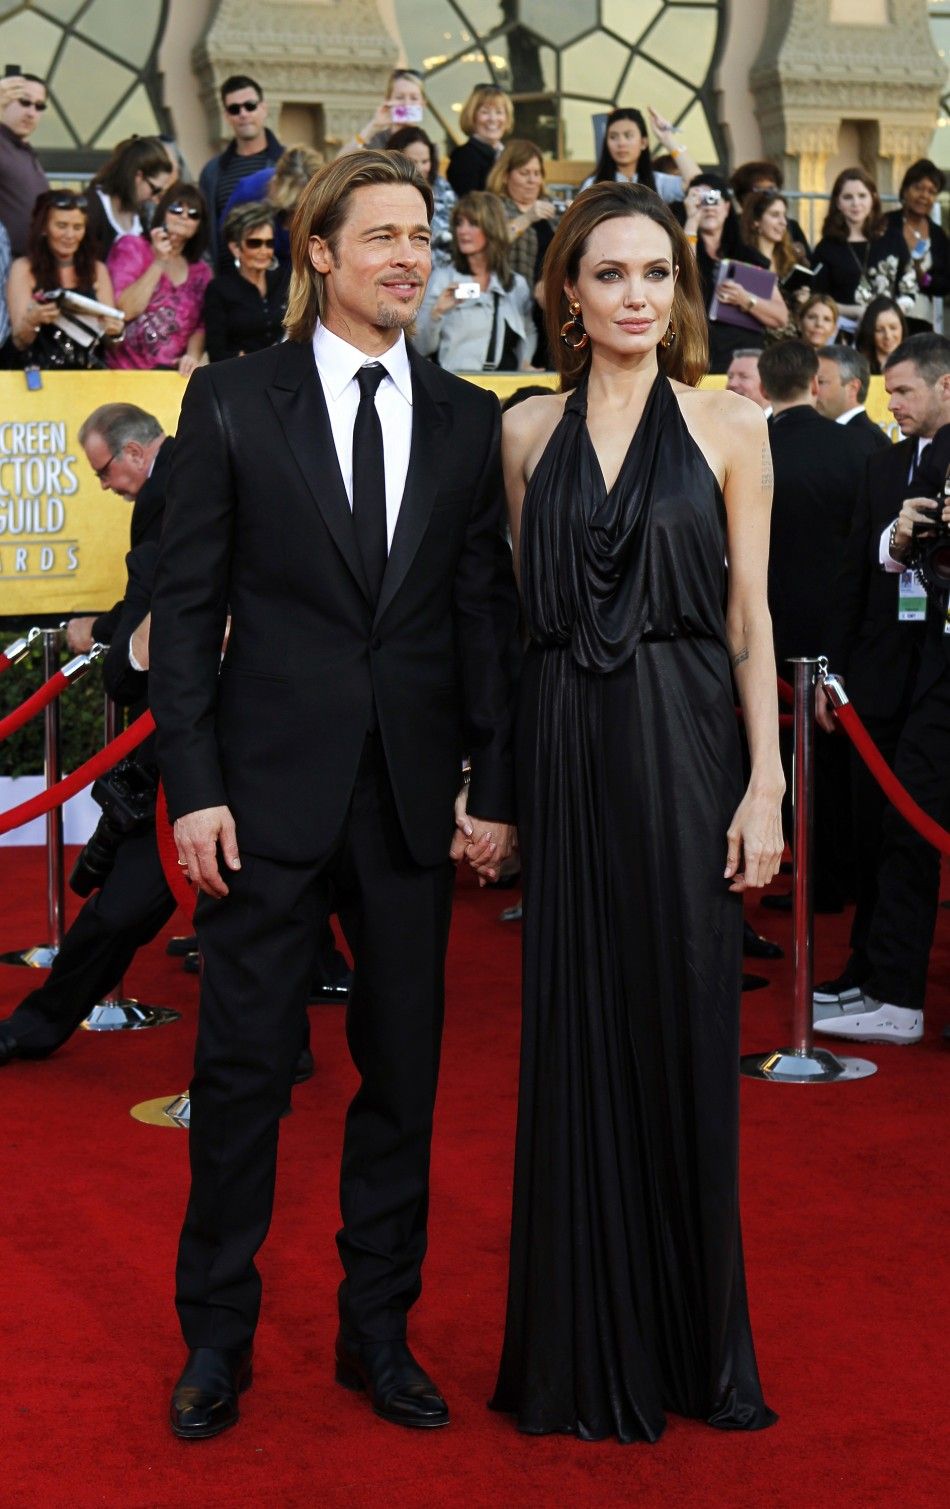 Brad-Angelina Most Photographed Celeb Couple at SAG Awards 2012 PHOTOS